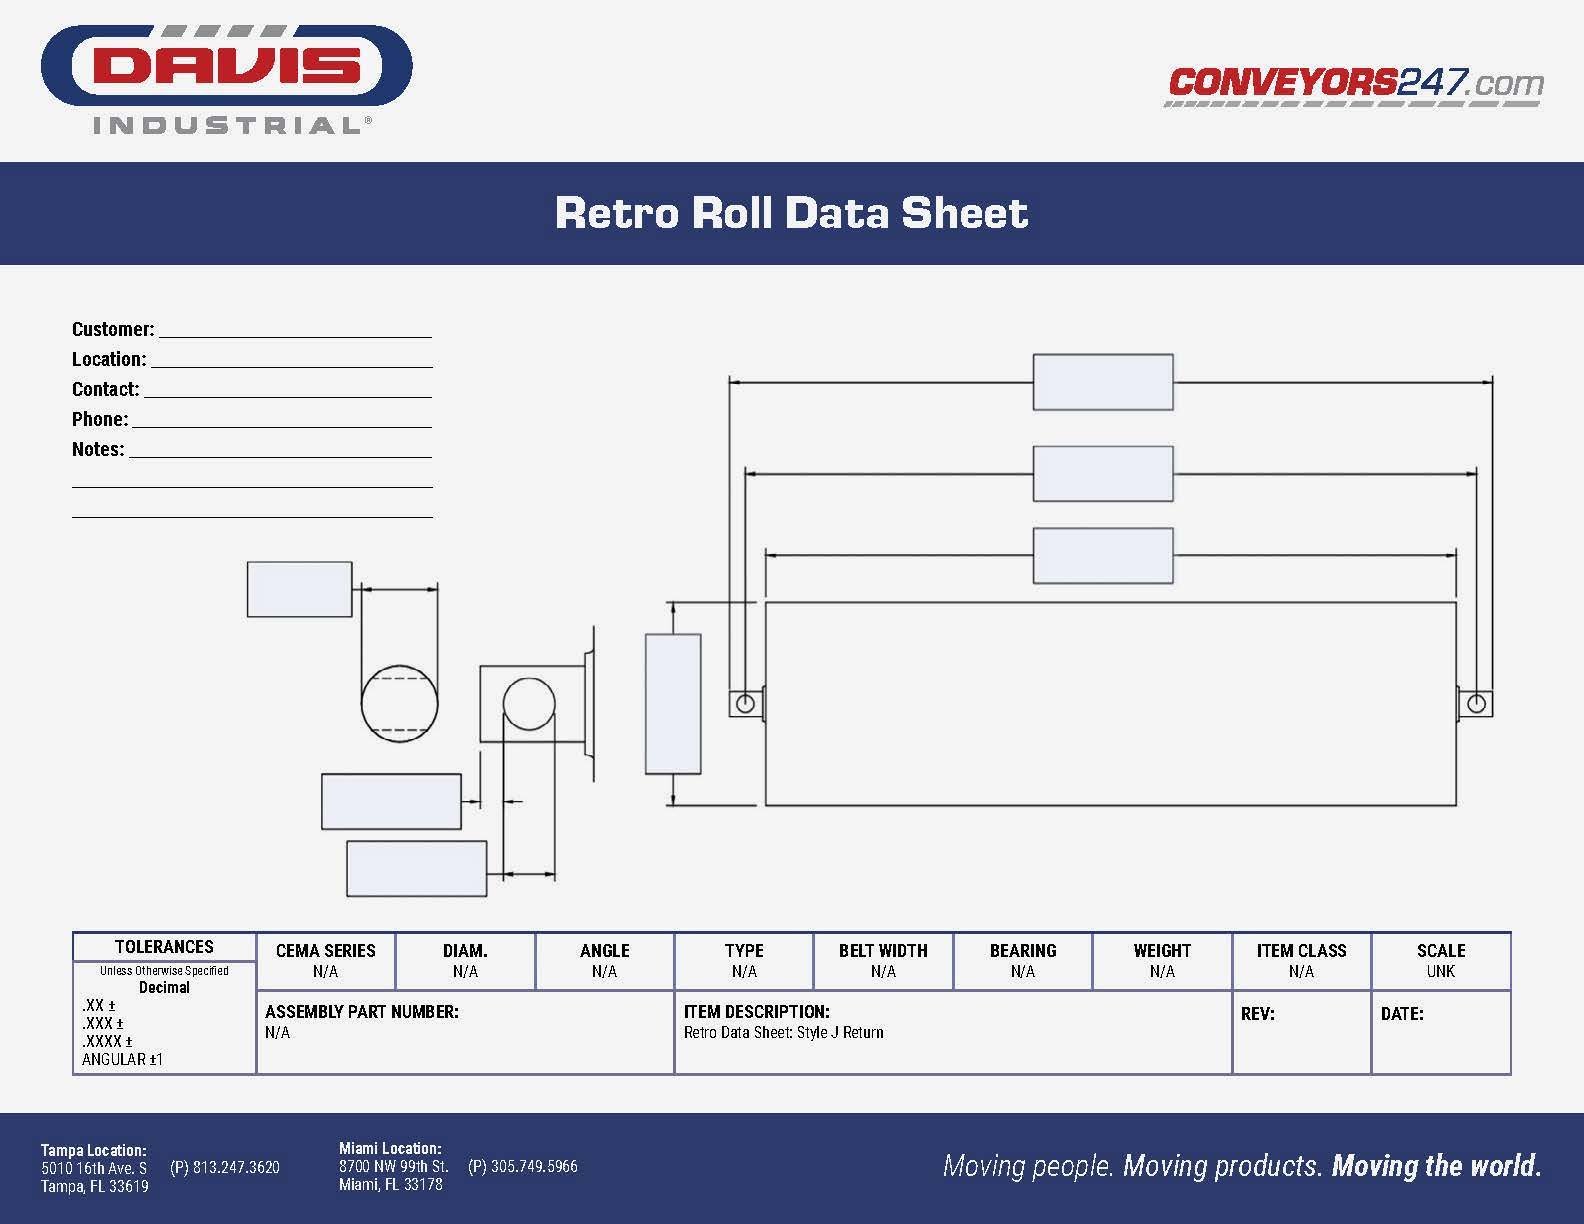 Davis_Retro Roll Data Sheet - Type J